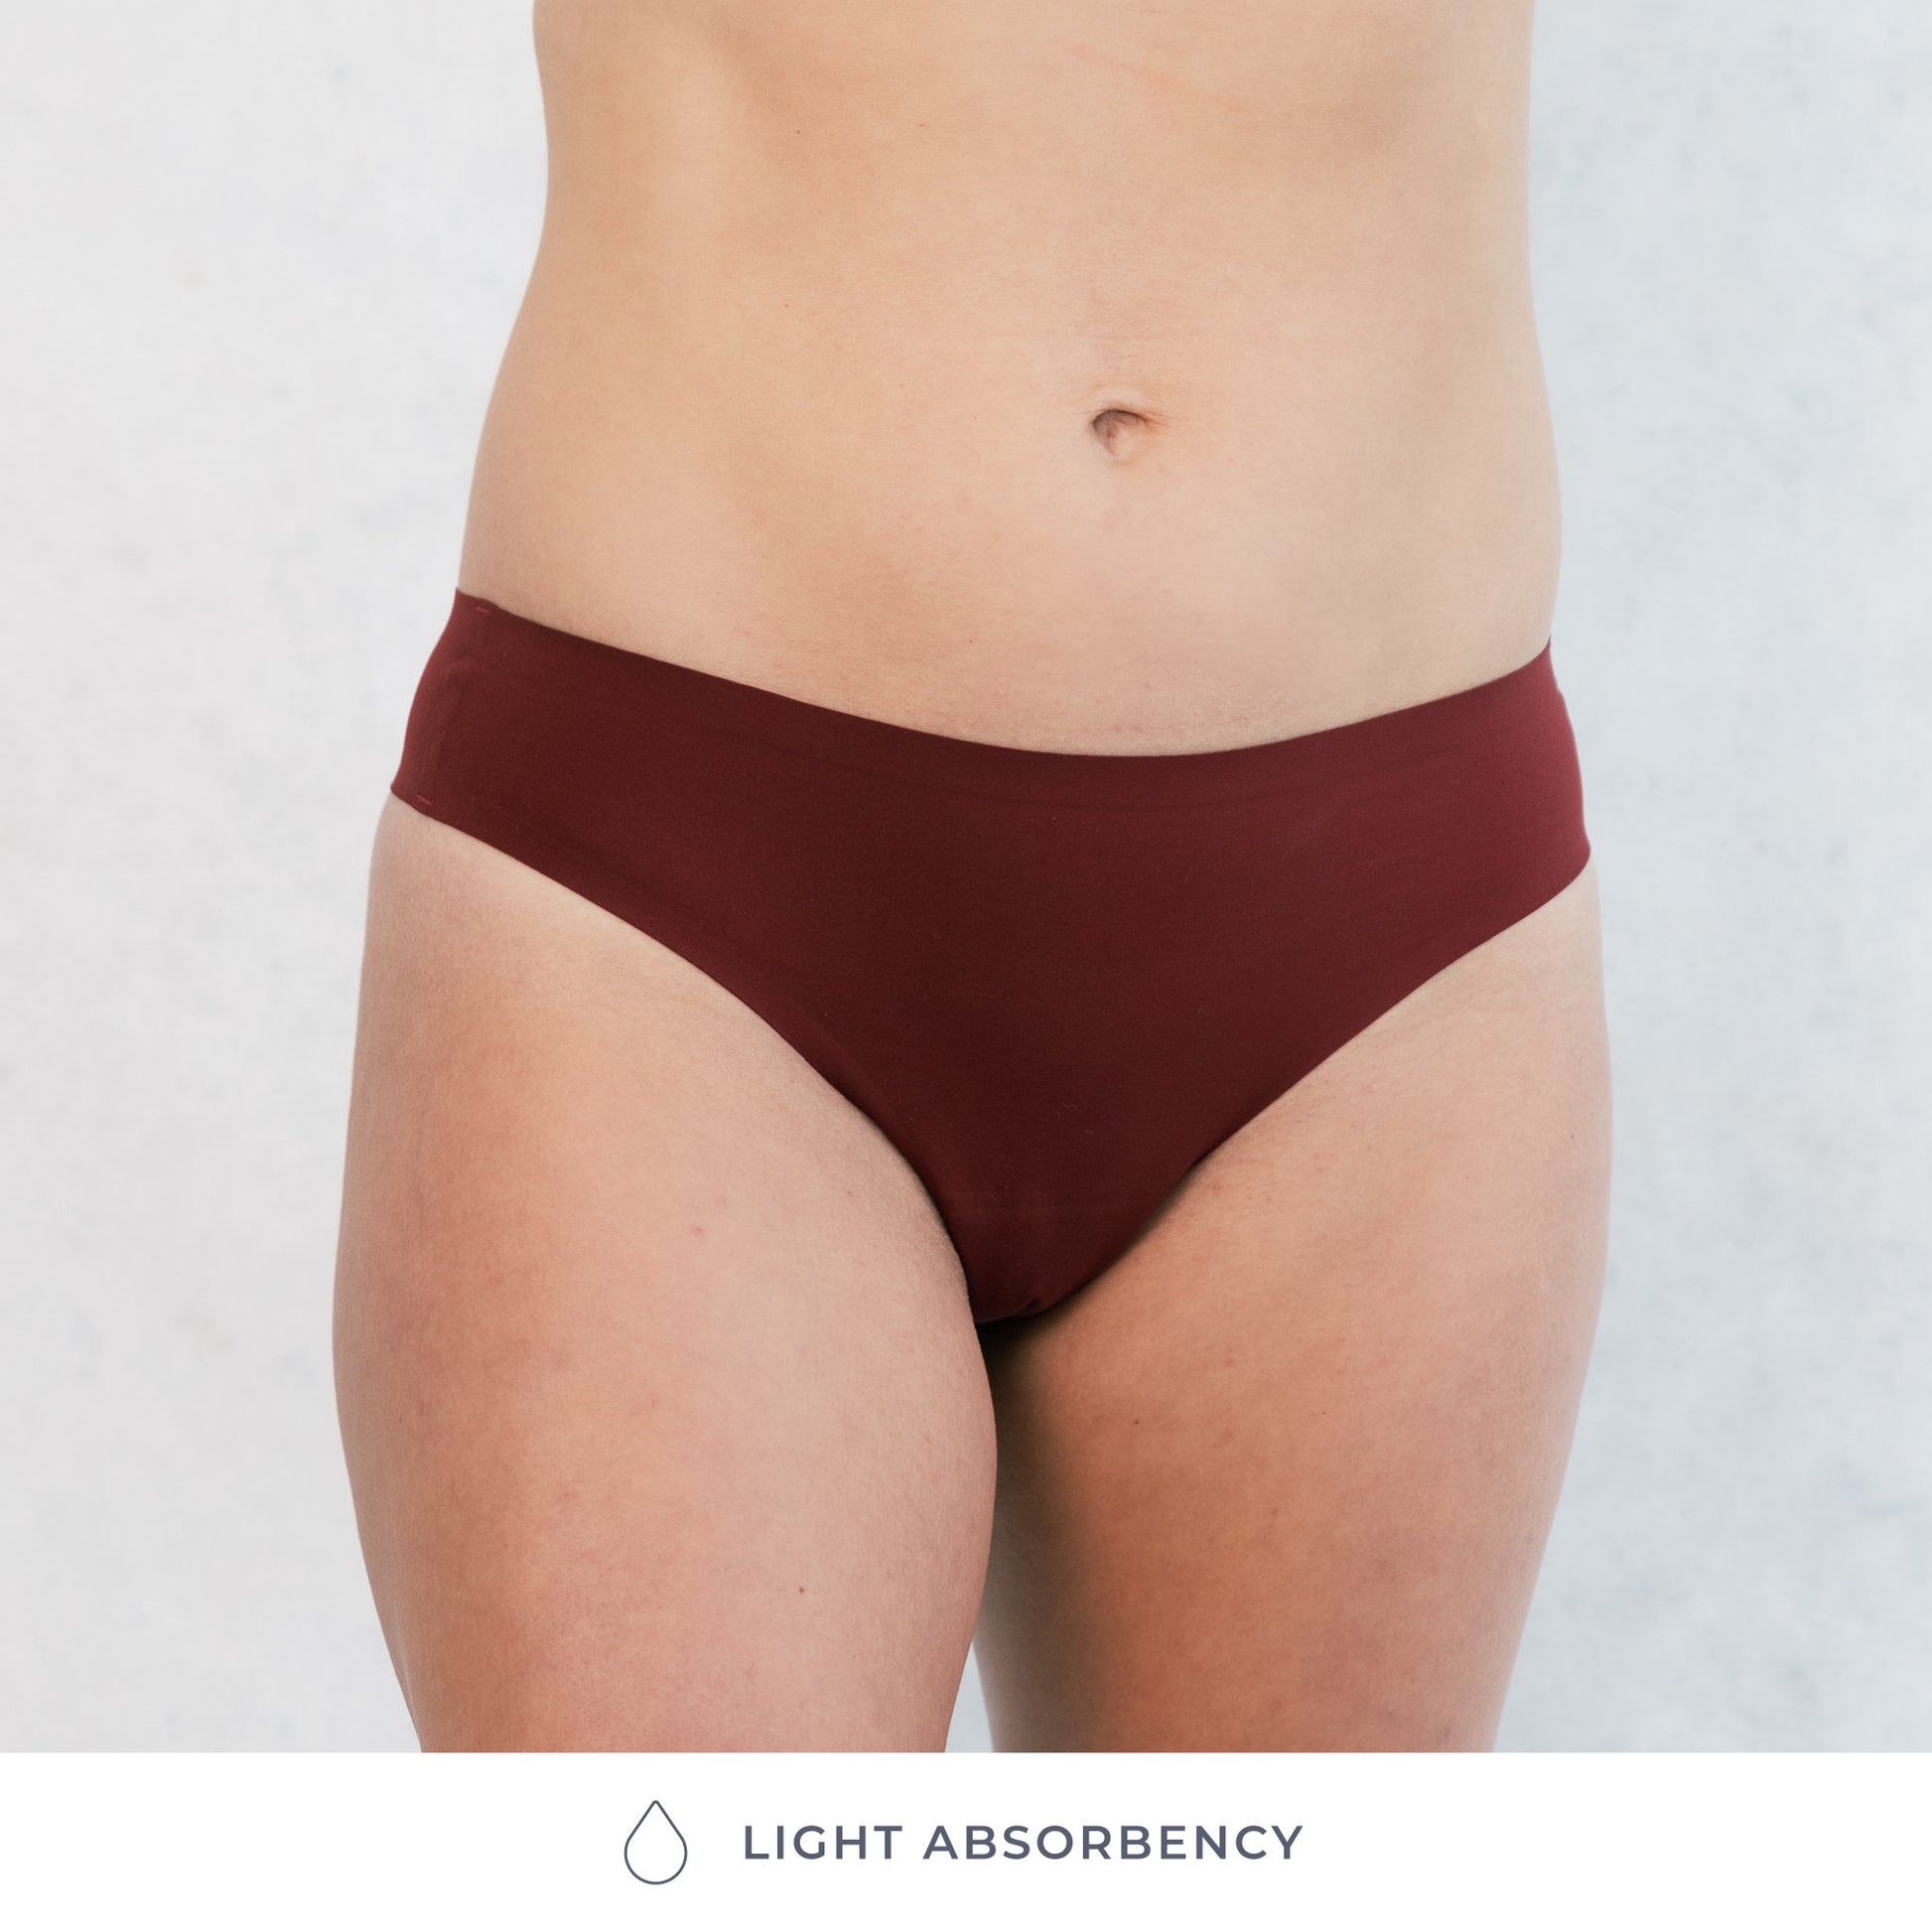  Saalt Reusable Period Underwear - Comfortable, Thin